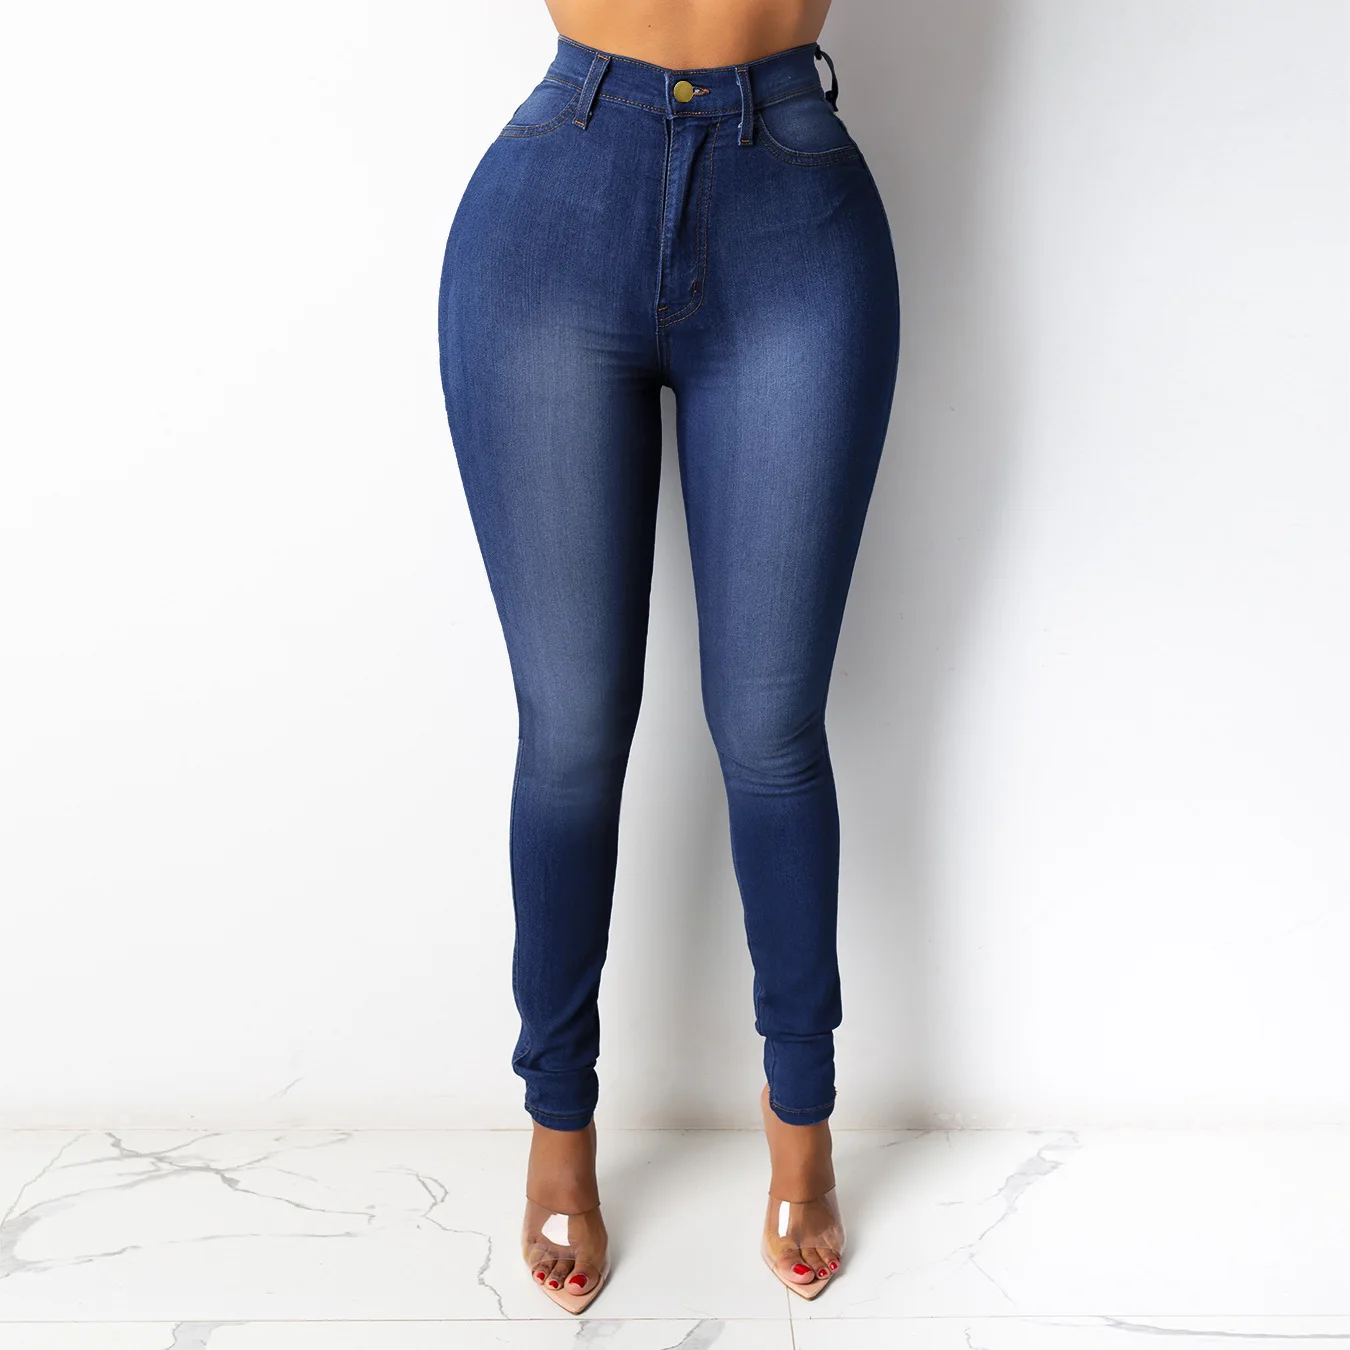 Black Skinny Jeans 2022 Spring Women Fashion Push Up High Waist Slim Fit Jeans Jeggings Woman Vintage Blue Denim Pencil Trousers blue jeans Jeans